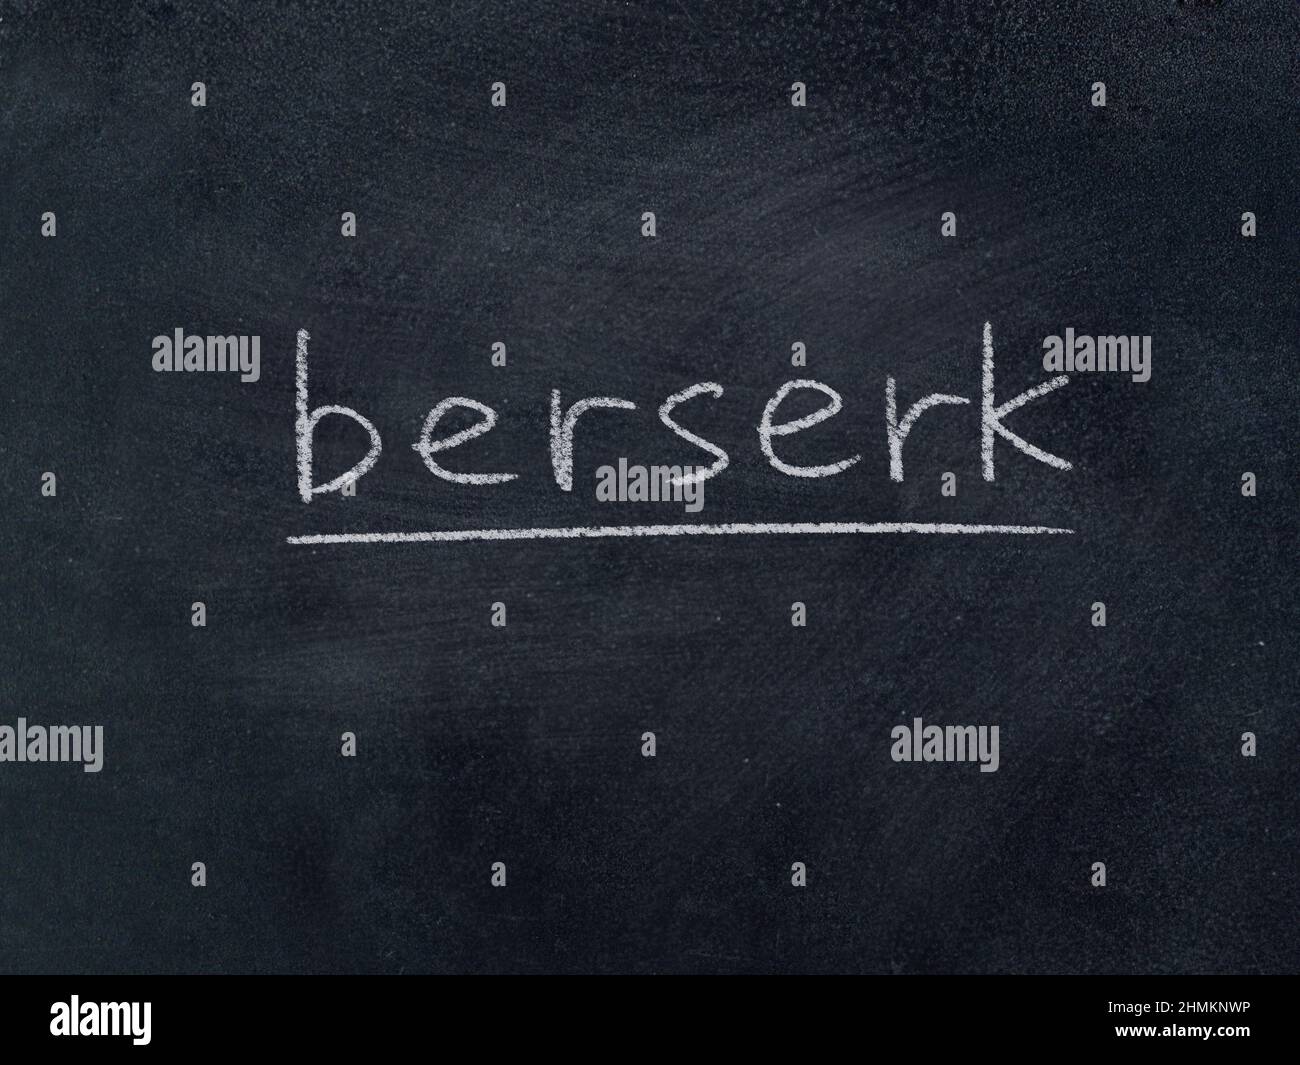 berserk concept word on blackboard background Stock Photo